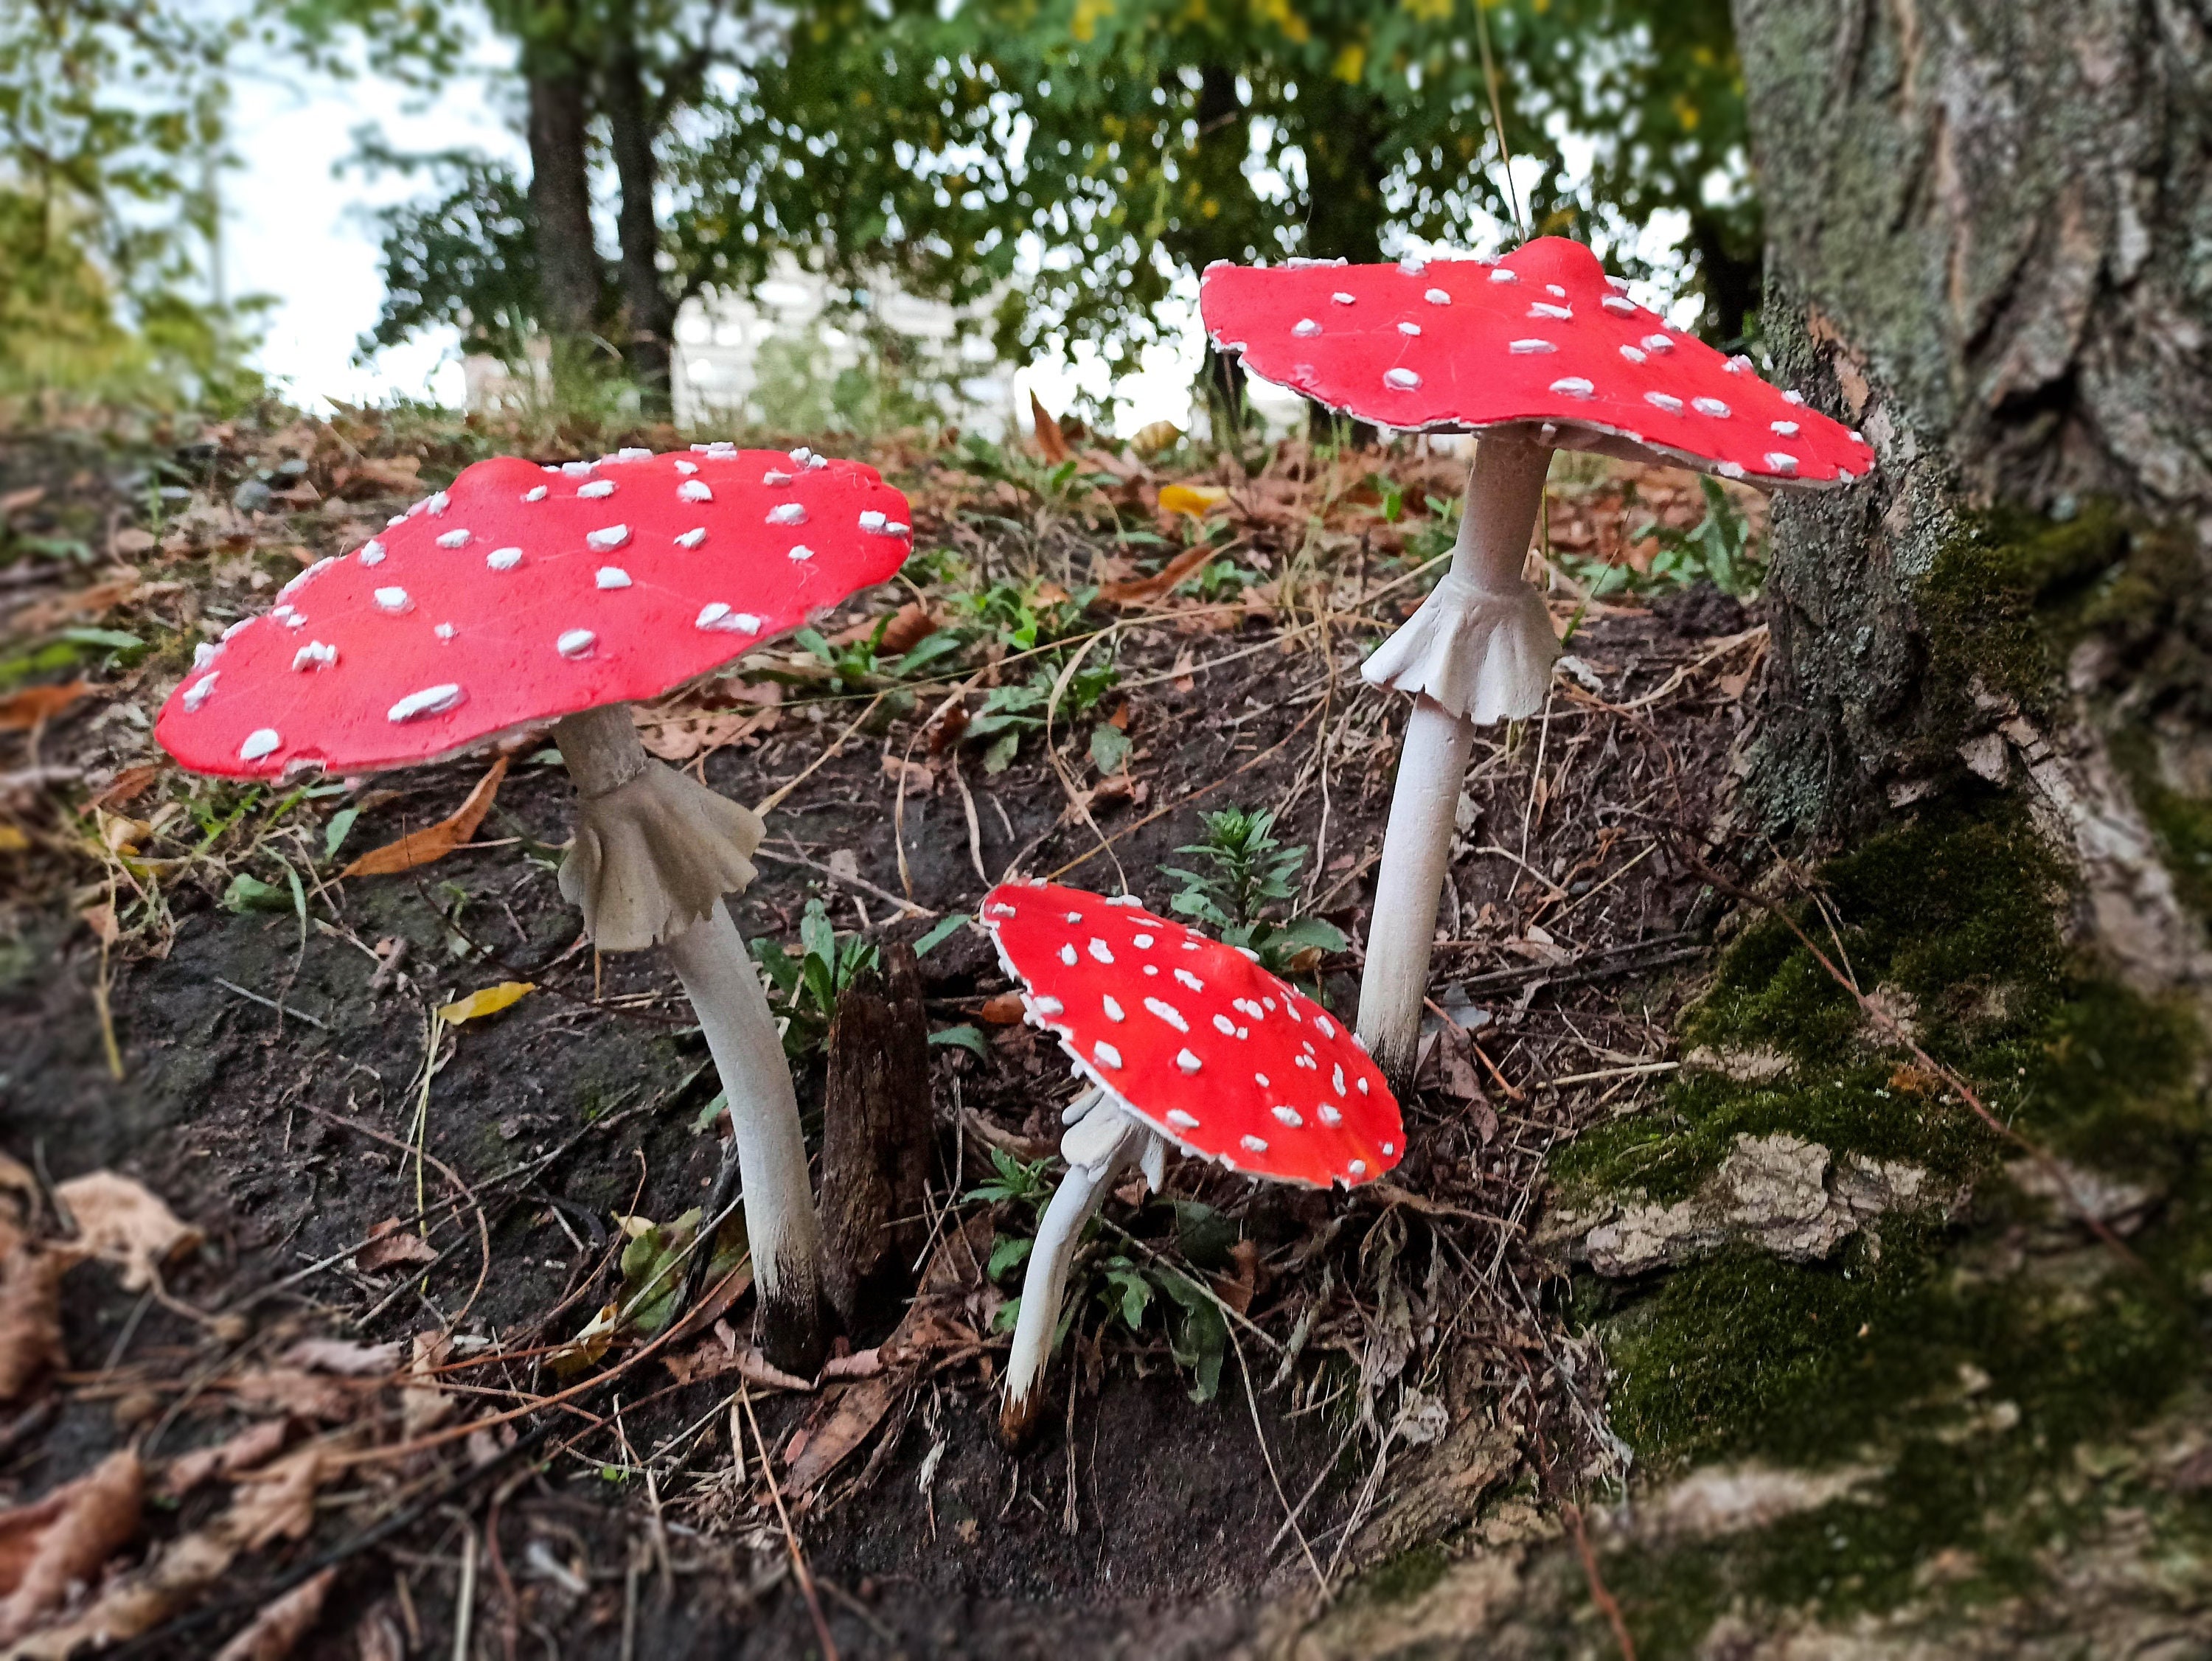 12pcs-red / White Lacquer Mushrooms-fake Mushrooms-artificial